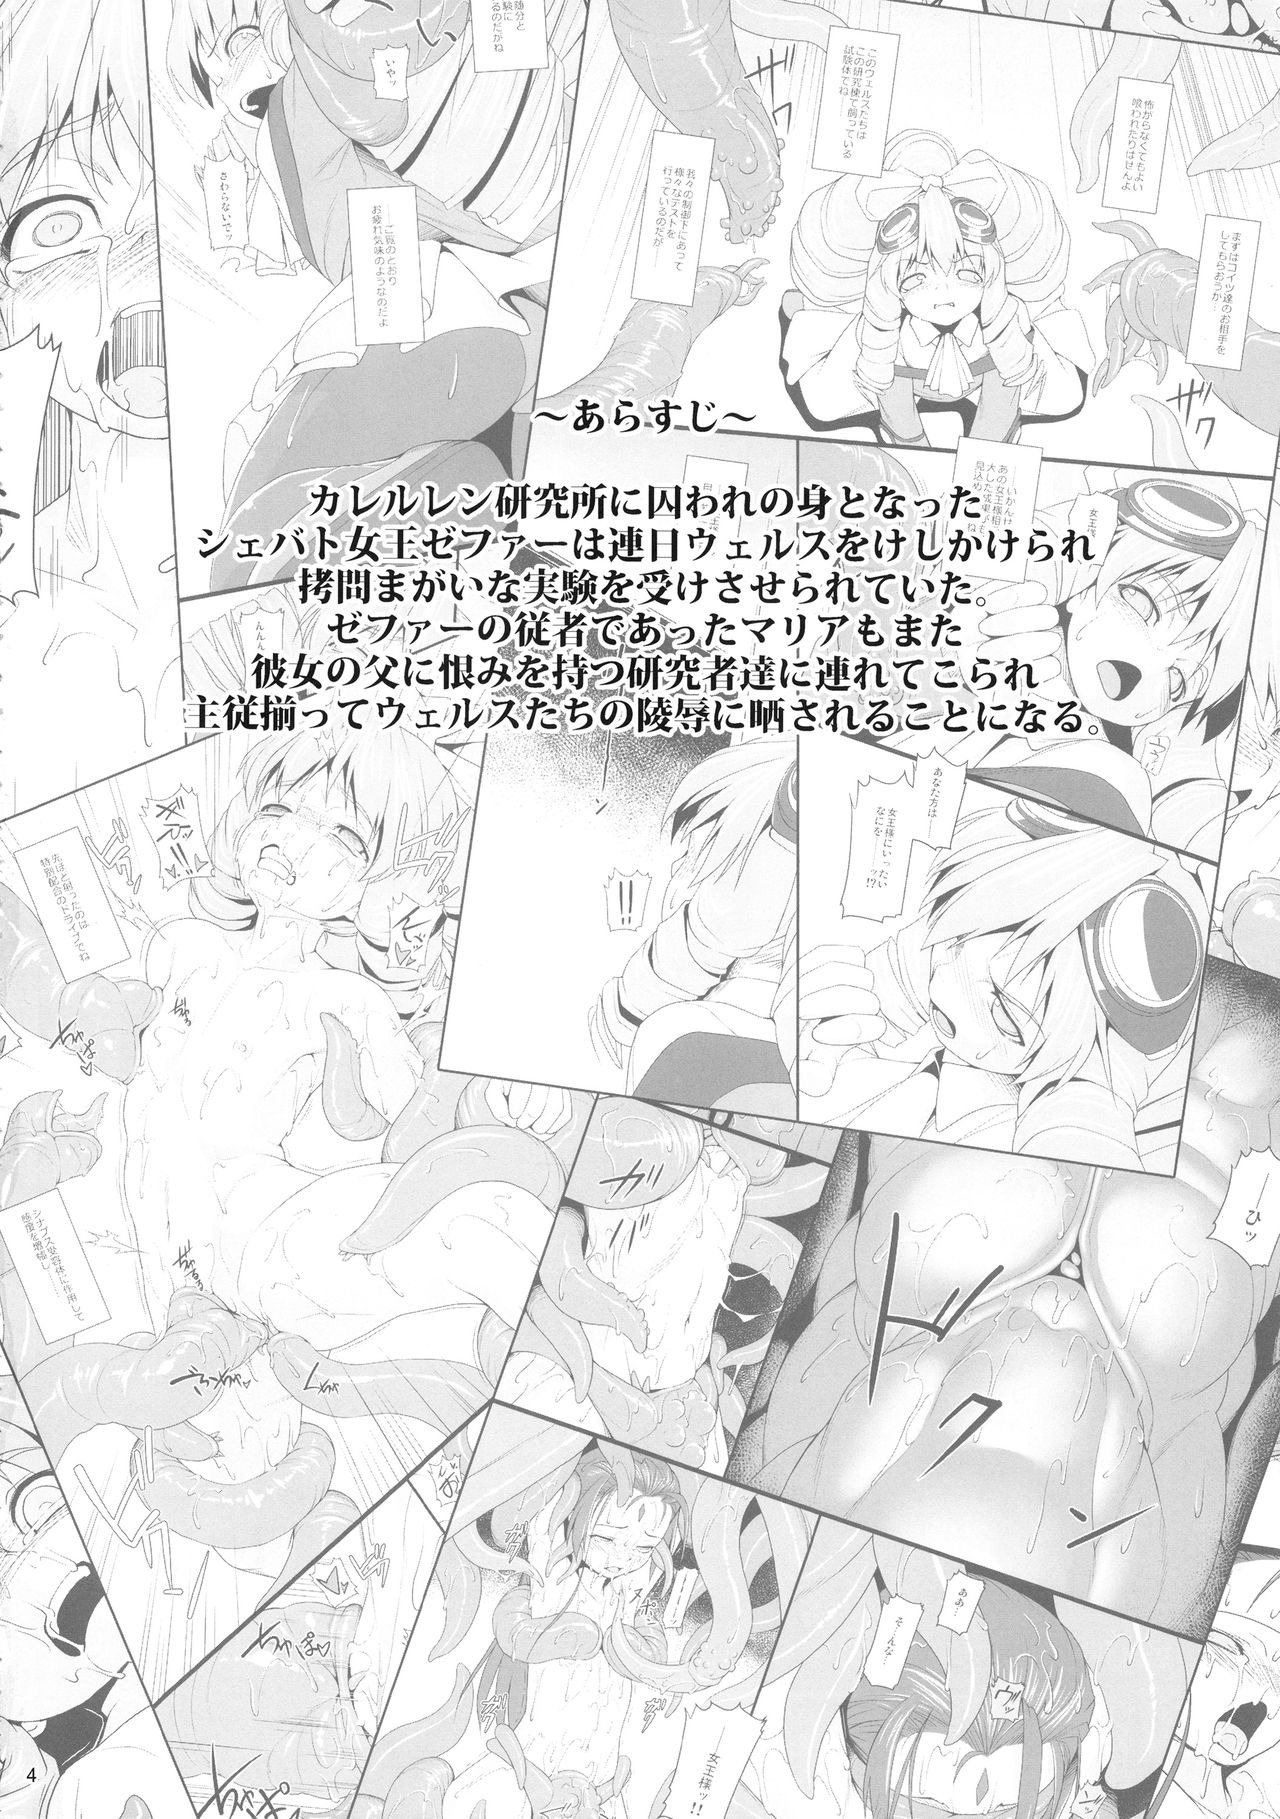 (COMIC1☆10) [AERIAL RAVE (Jacky)] 贖罪ノ間6 (ゼノギアス)